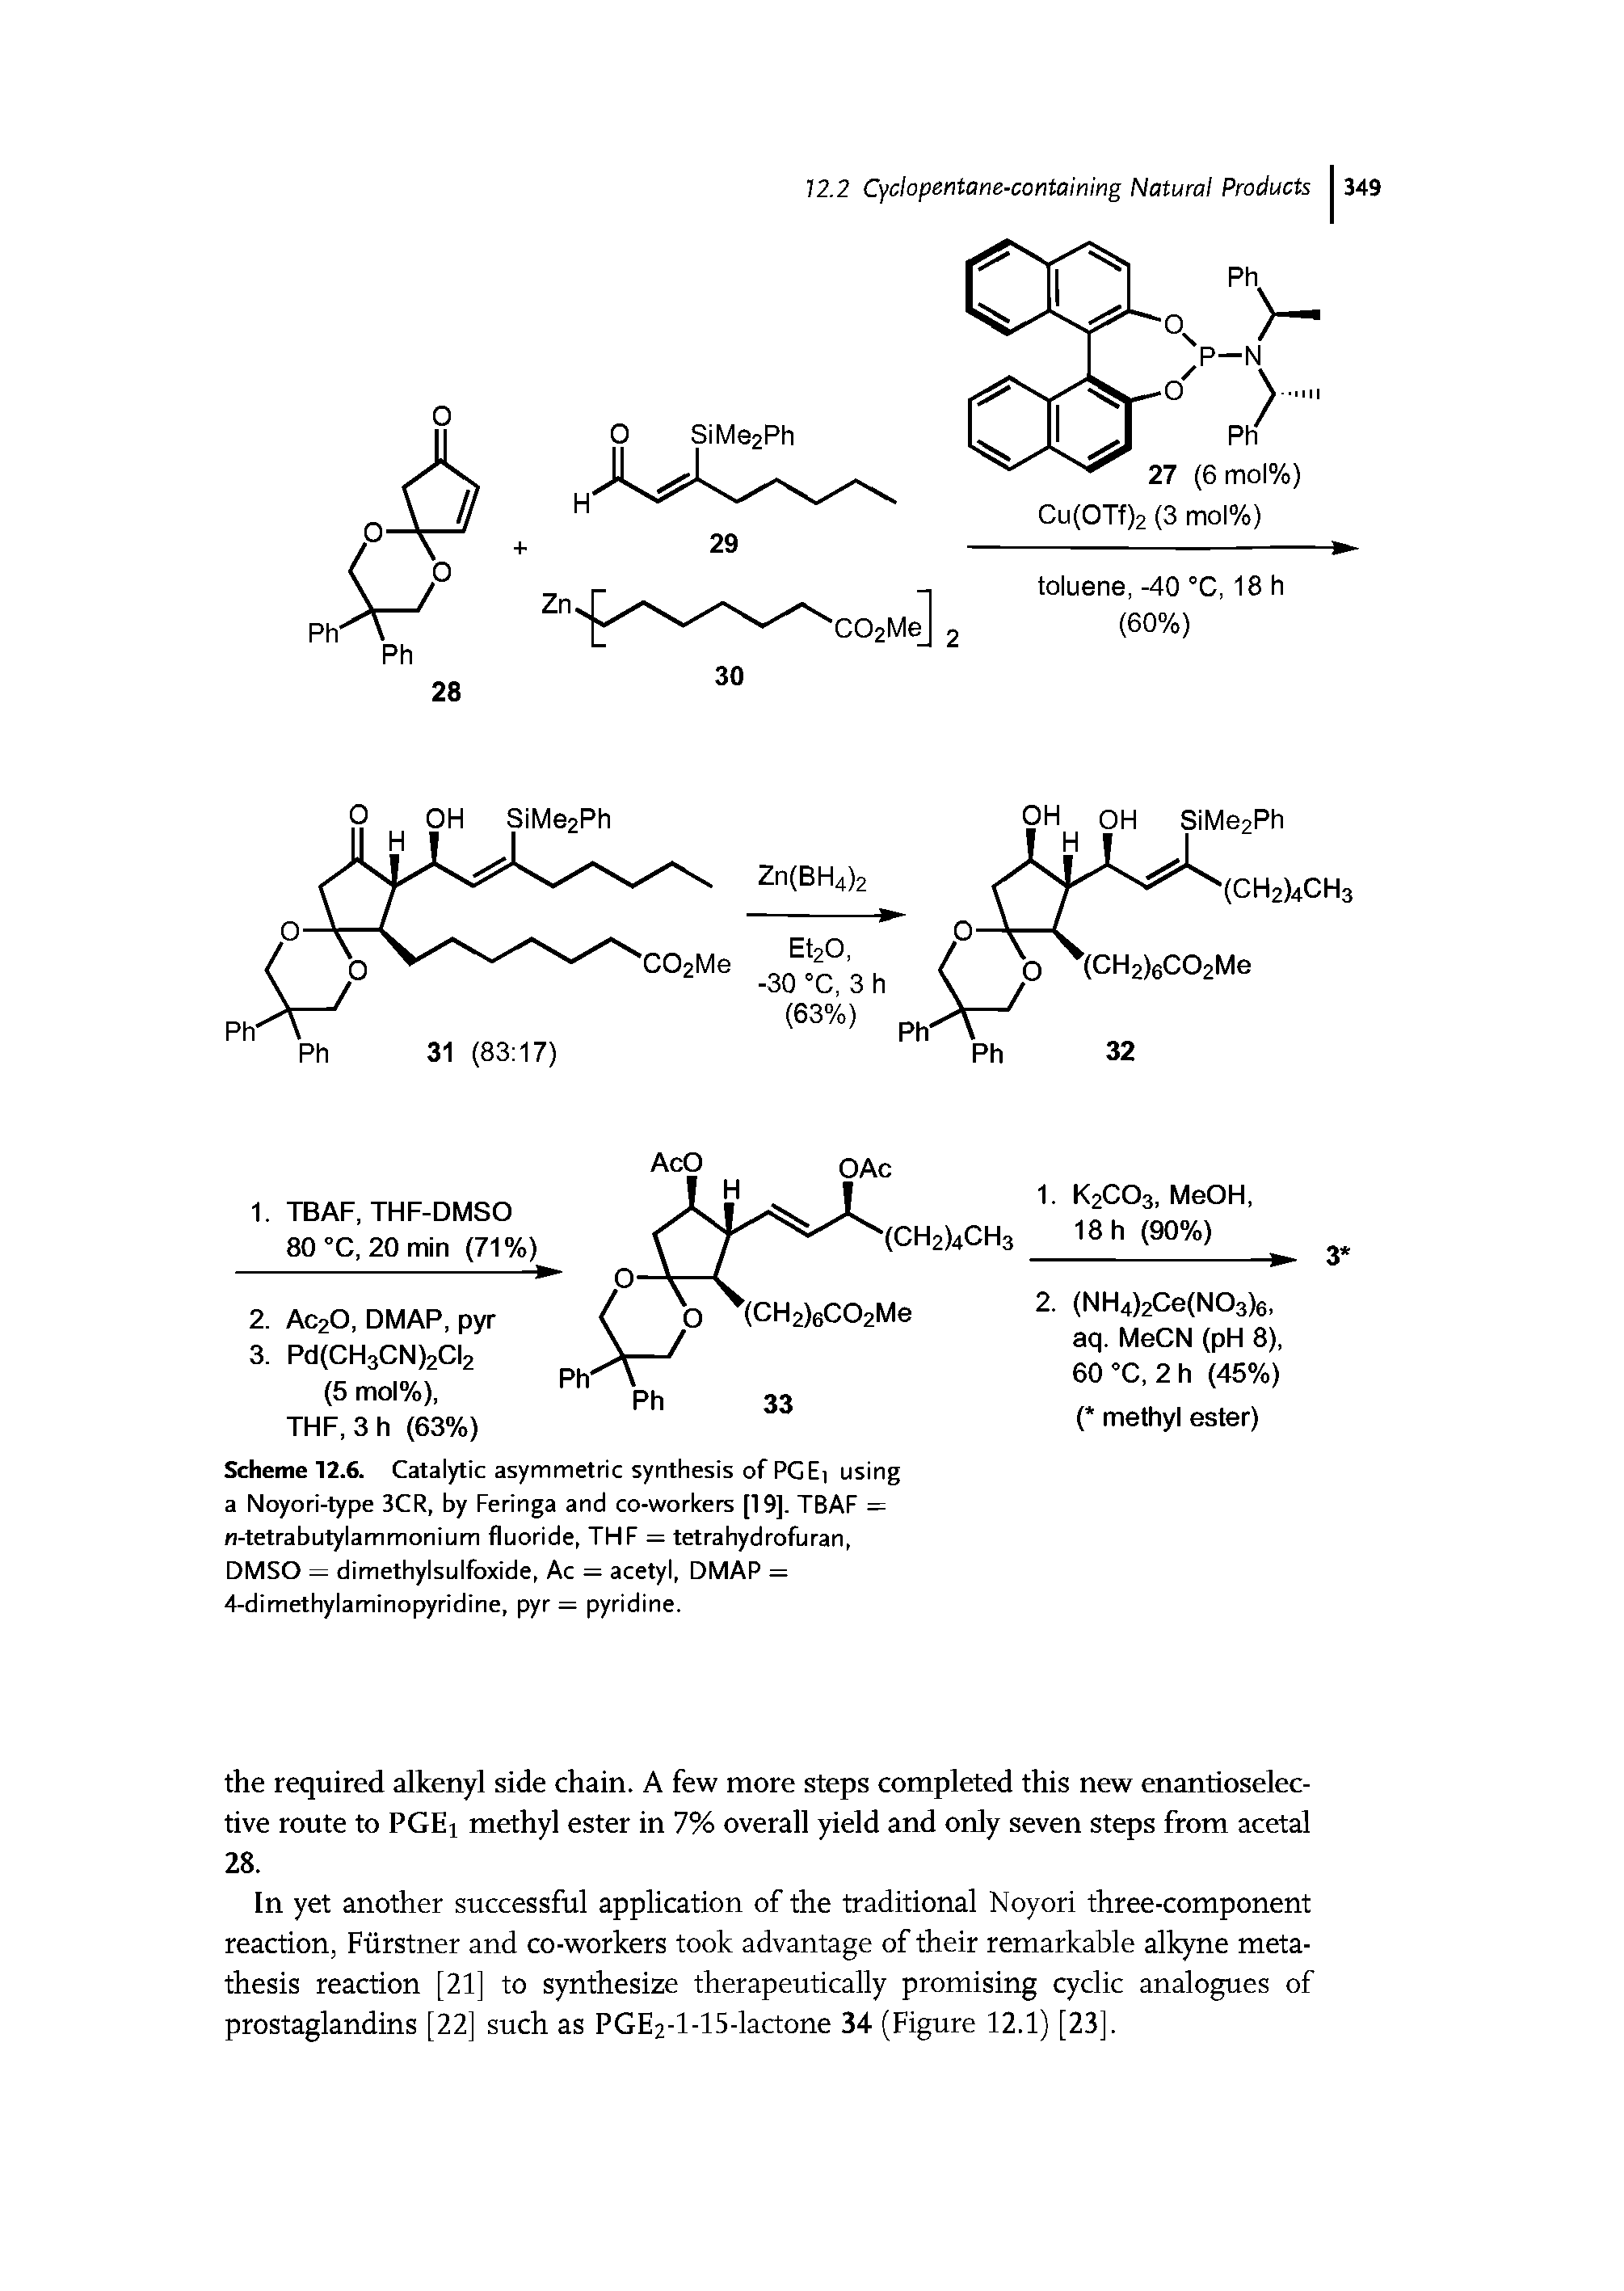 Scheme 12.6. Catalytic asymmetric synthesis of PC Ei using a Noyori-type 3CR, by Feringa and co-workers [19]. TBAF = n-tetrabutylammonium fluoride, THF = tetrahydrofuran, DMSO = dimethylsulfoxide, Ac = acetyl, DMAP = 4-dimethylaminopyridine, pyr = pyridine.